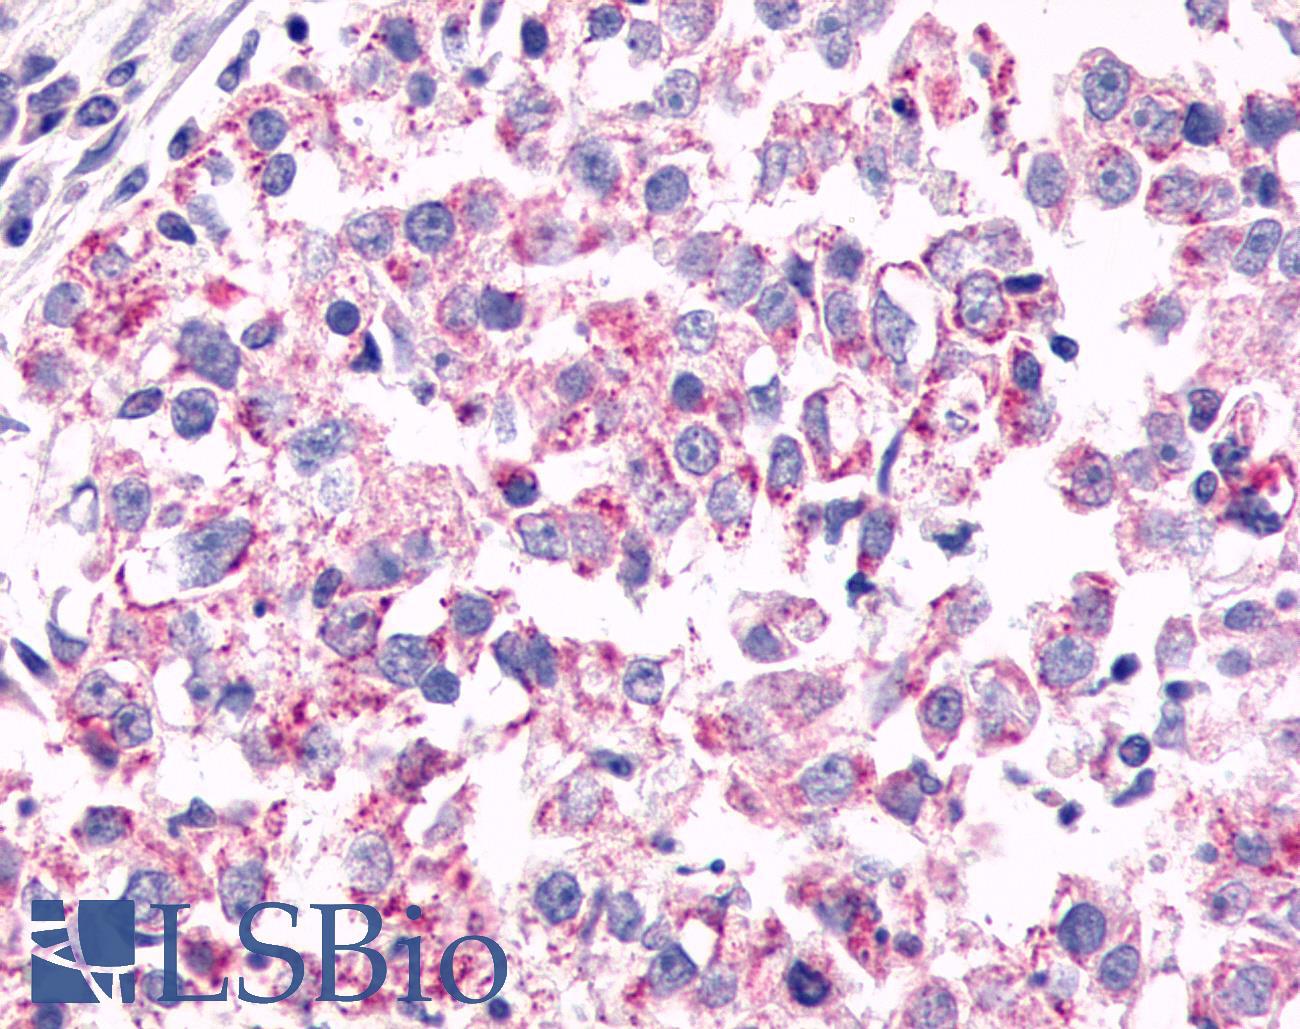 GPR26 Antibody - Breast, Carcinoma